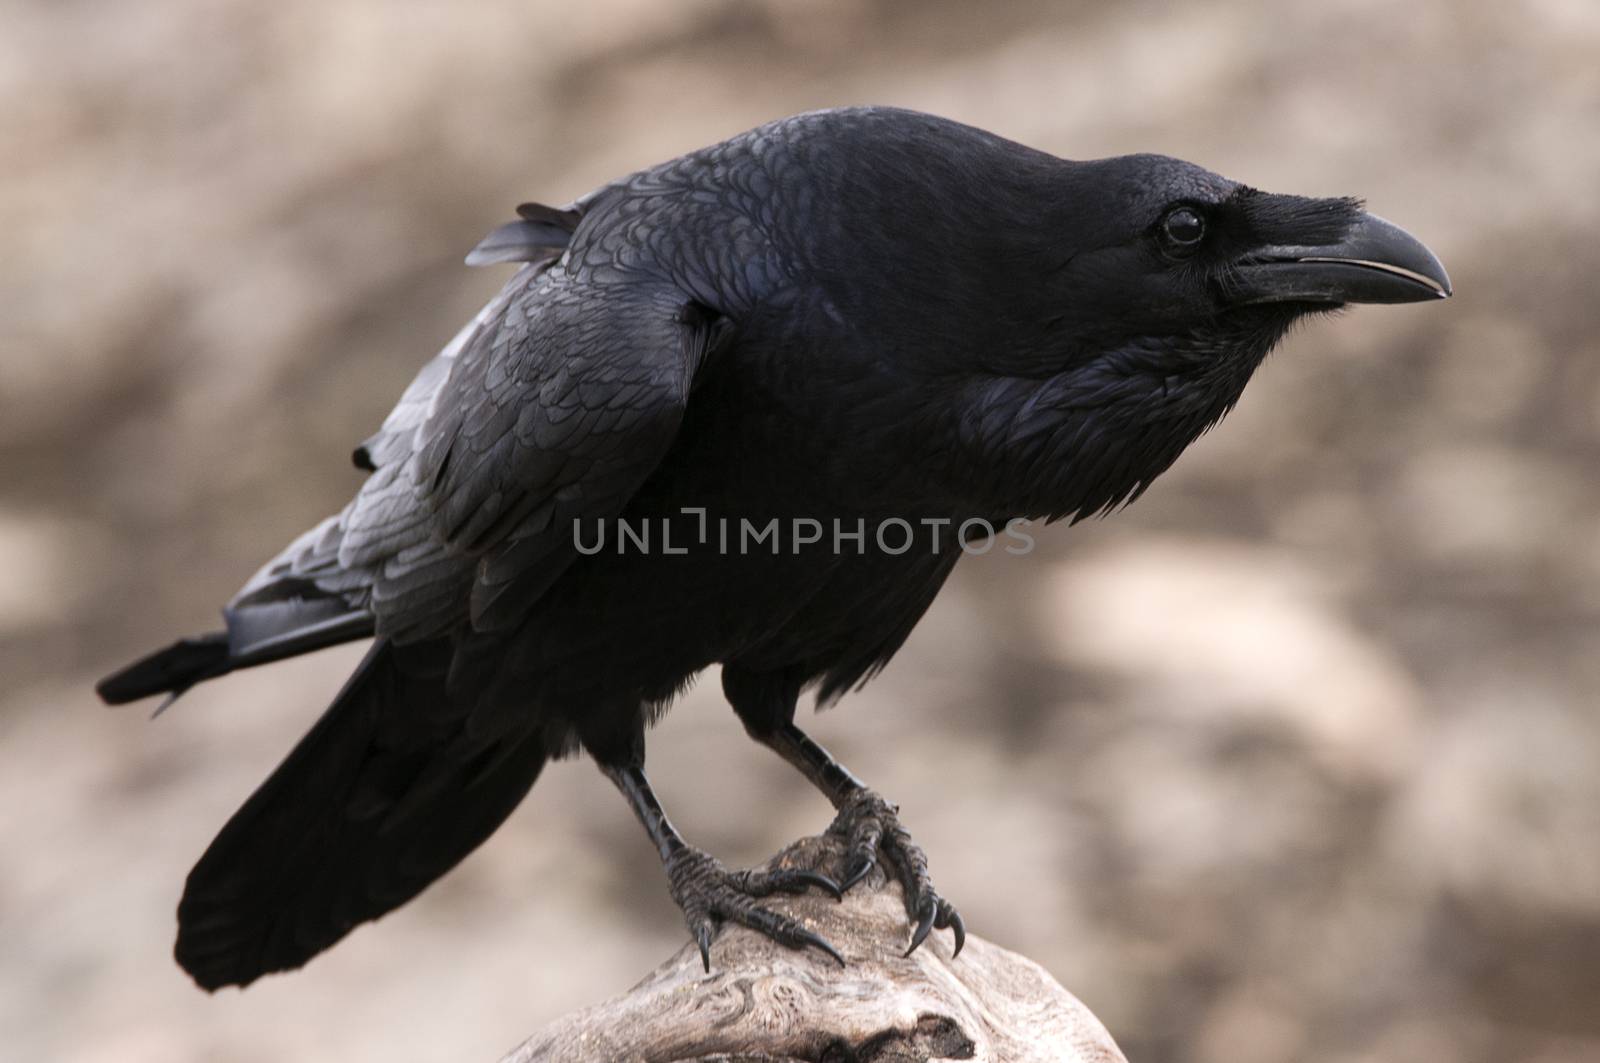 Raven - Corvus corax,   portrait and social behavior by jalonsohu@gmail.com